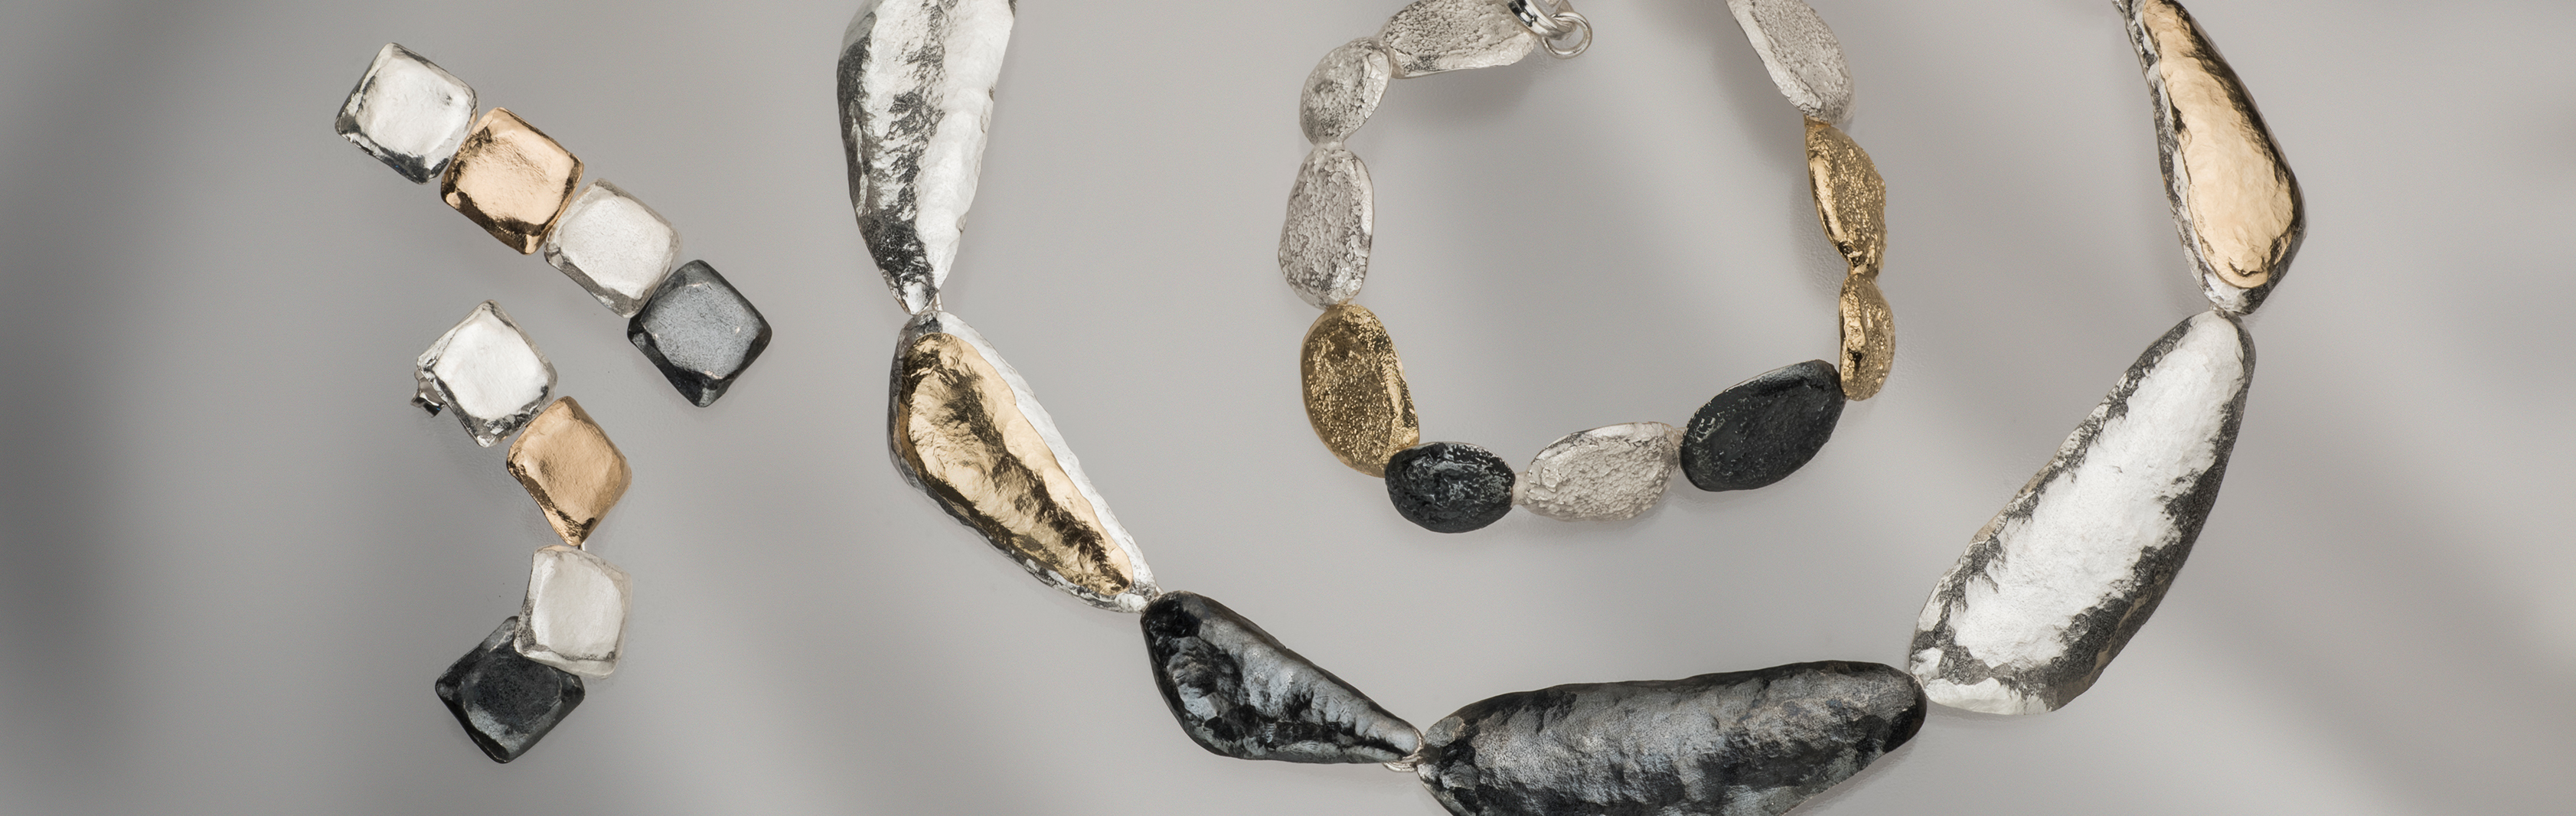 Trio Collection | White, Oxidized & Gilded Silver Jewelry